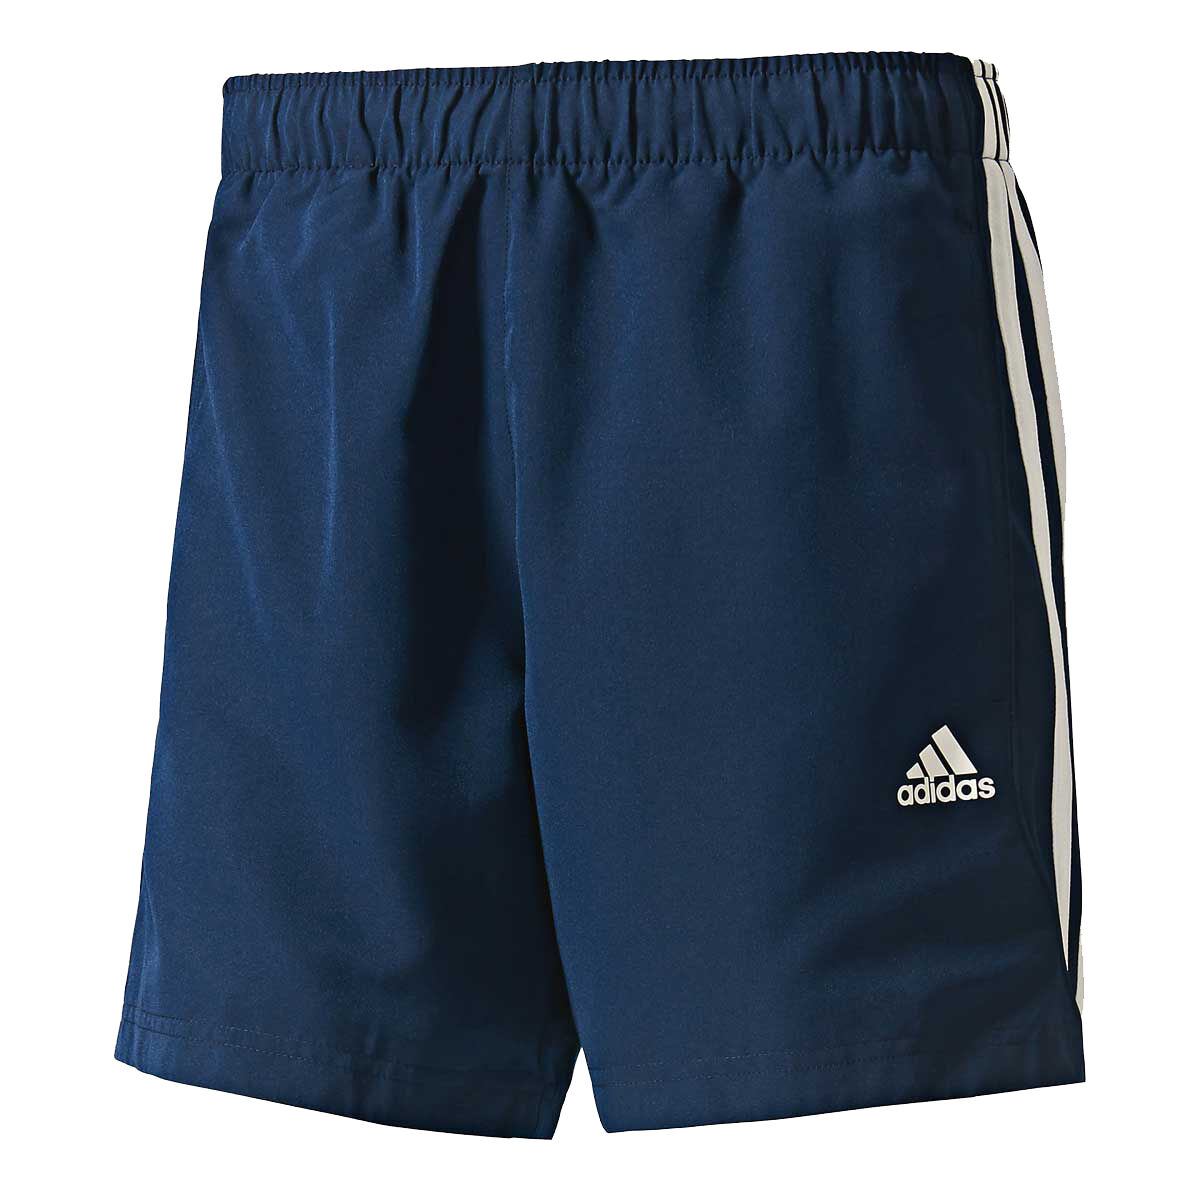 adidas chelsea shorts blue